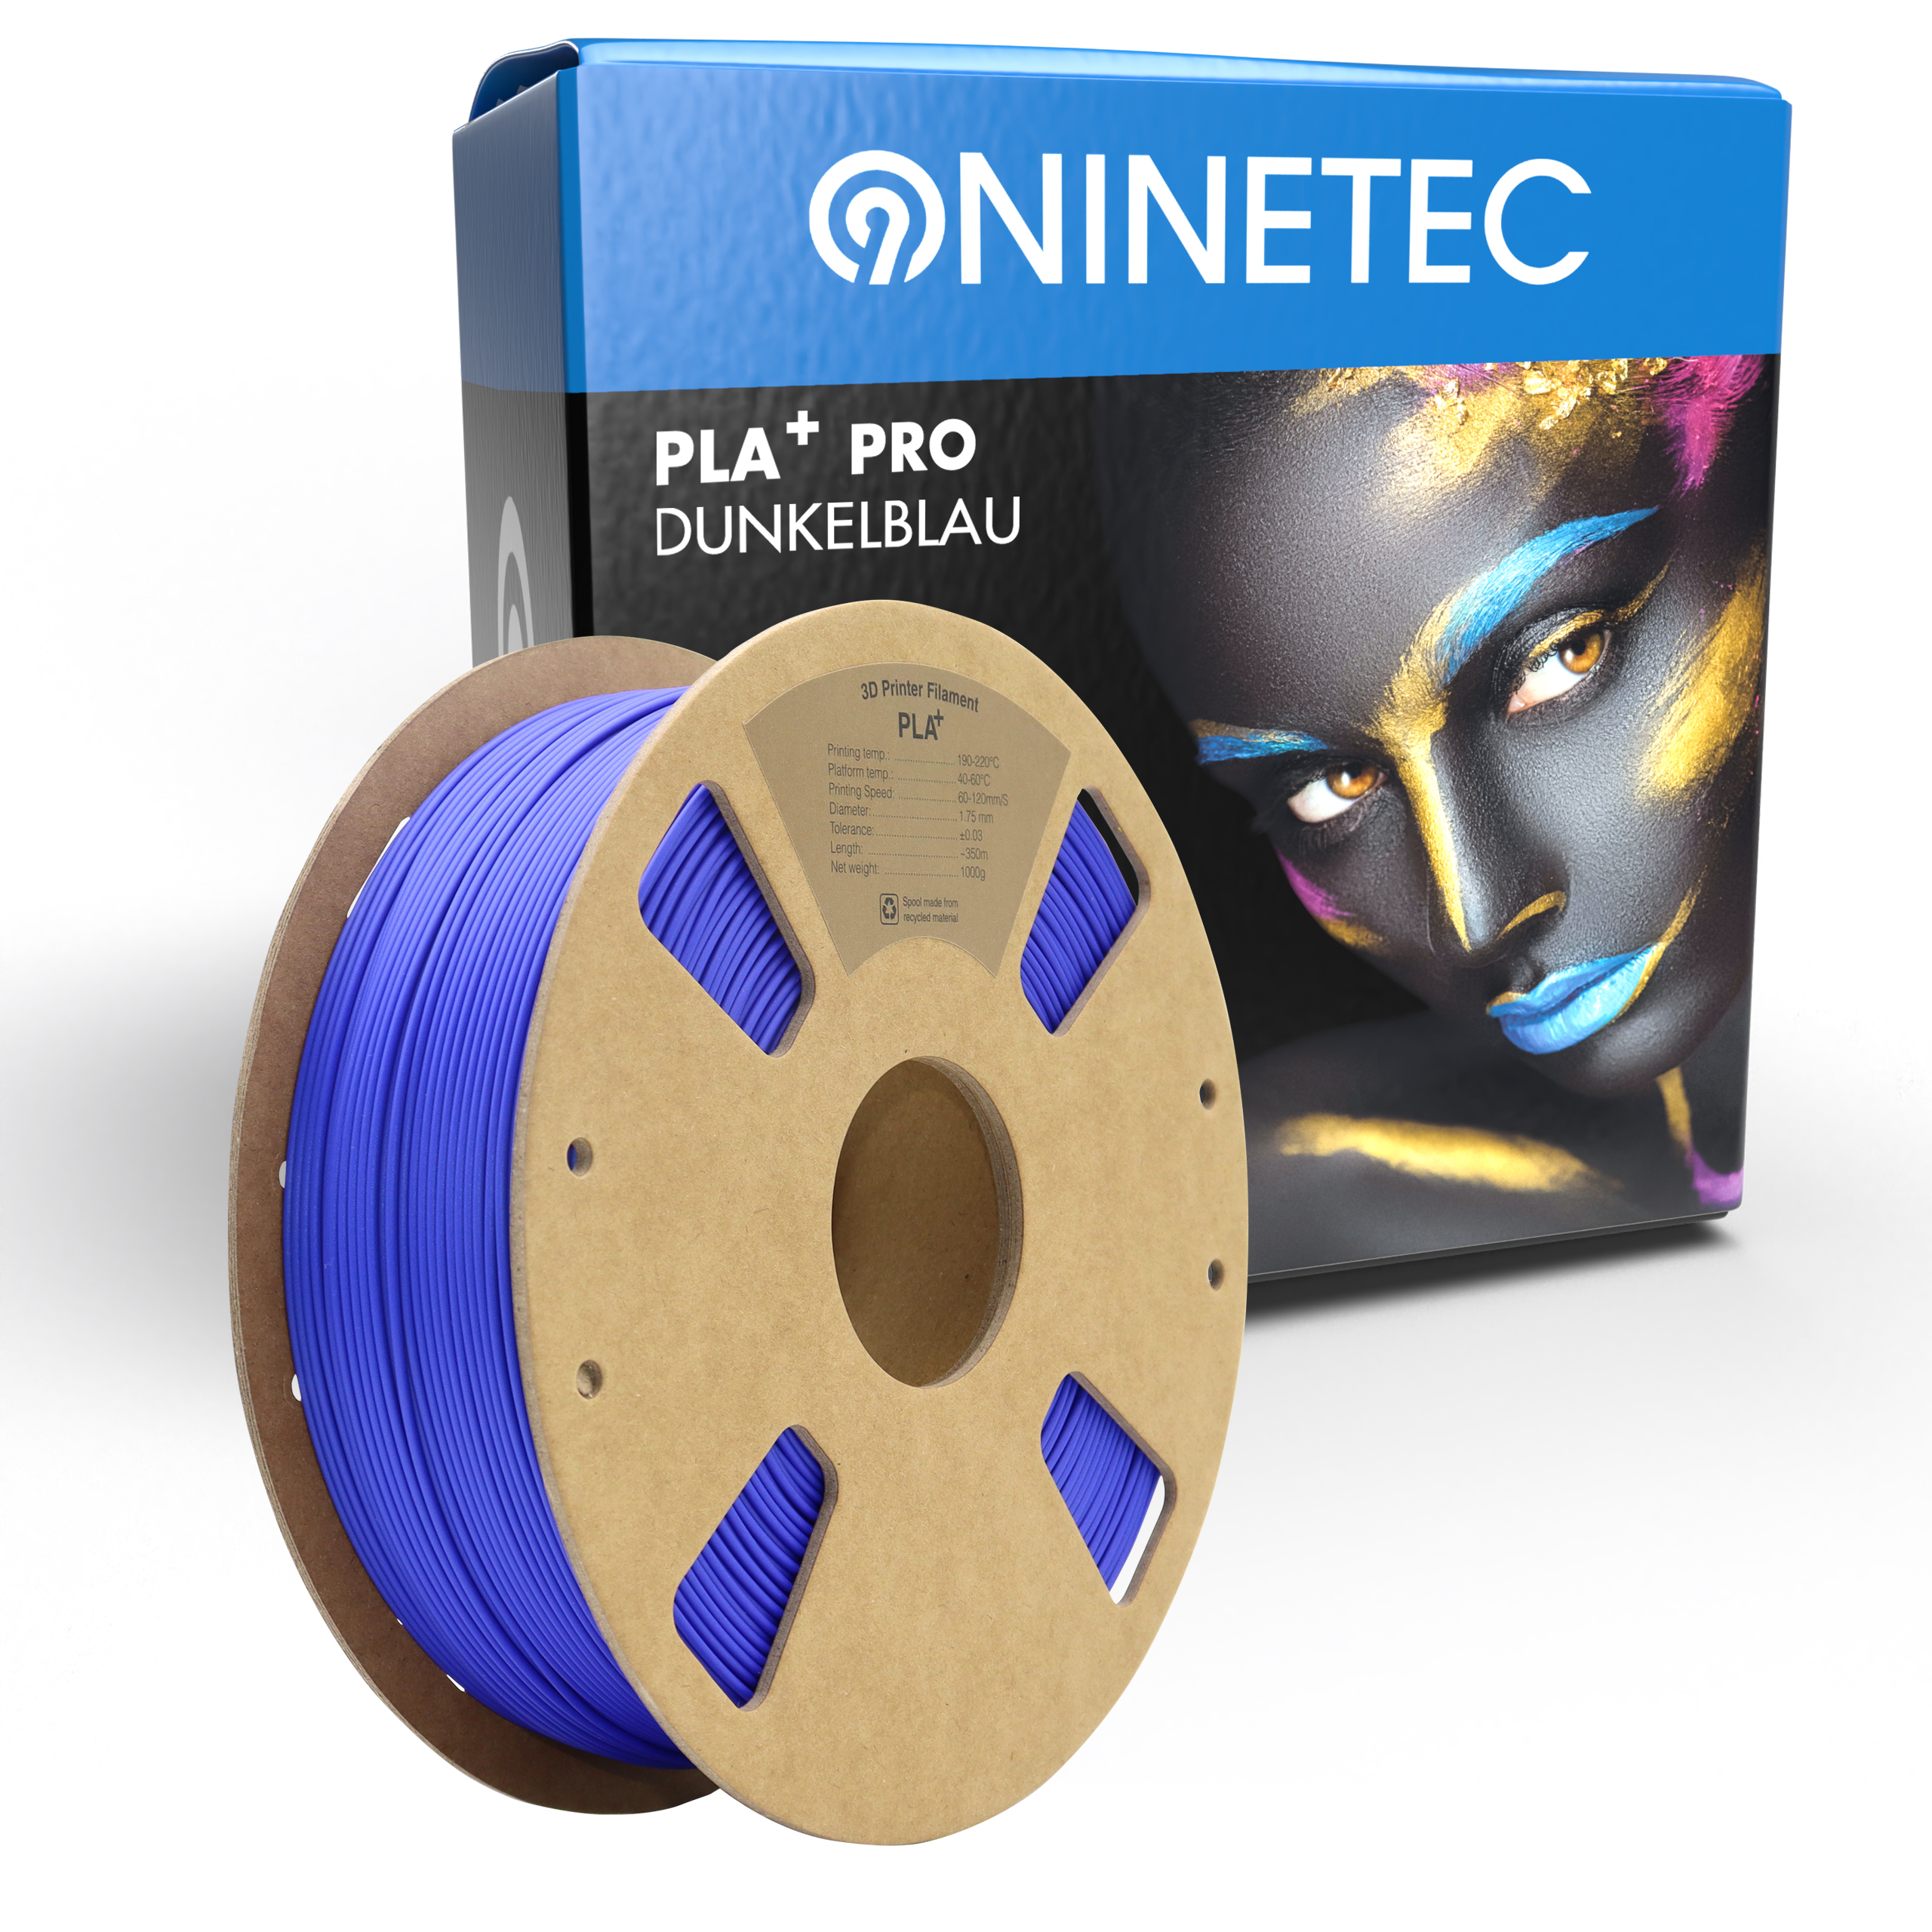 NINETEC PLA+ PRO dunkelblau Filament